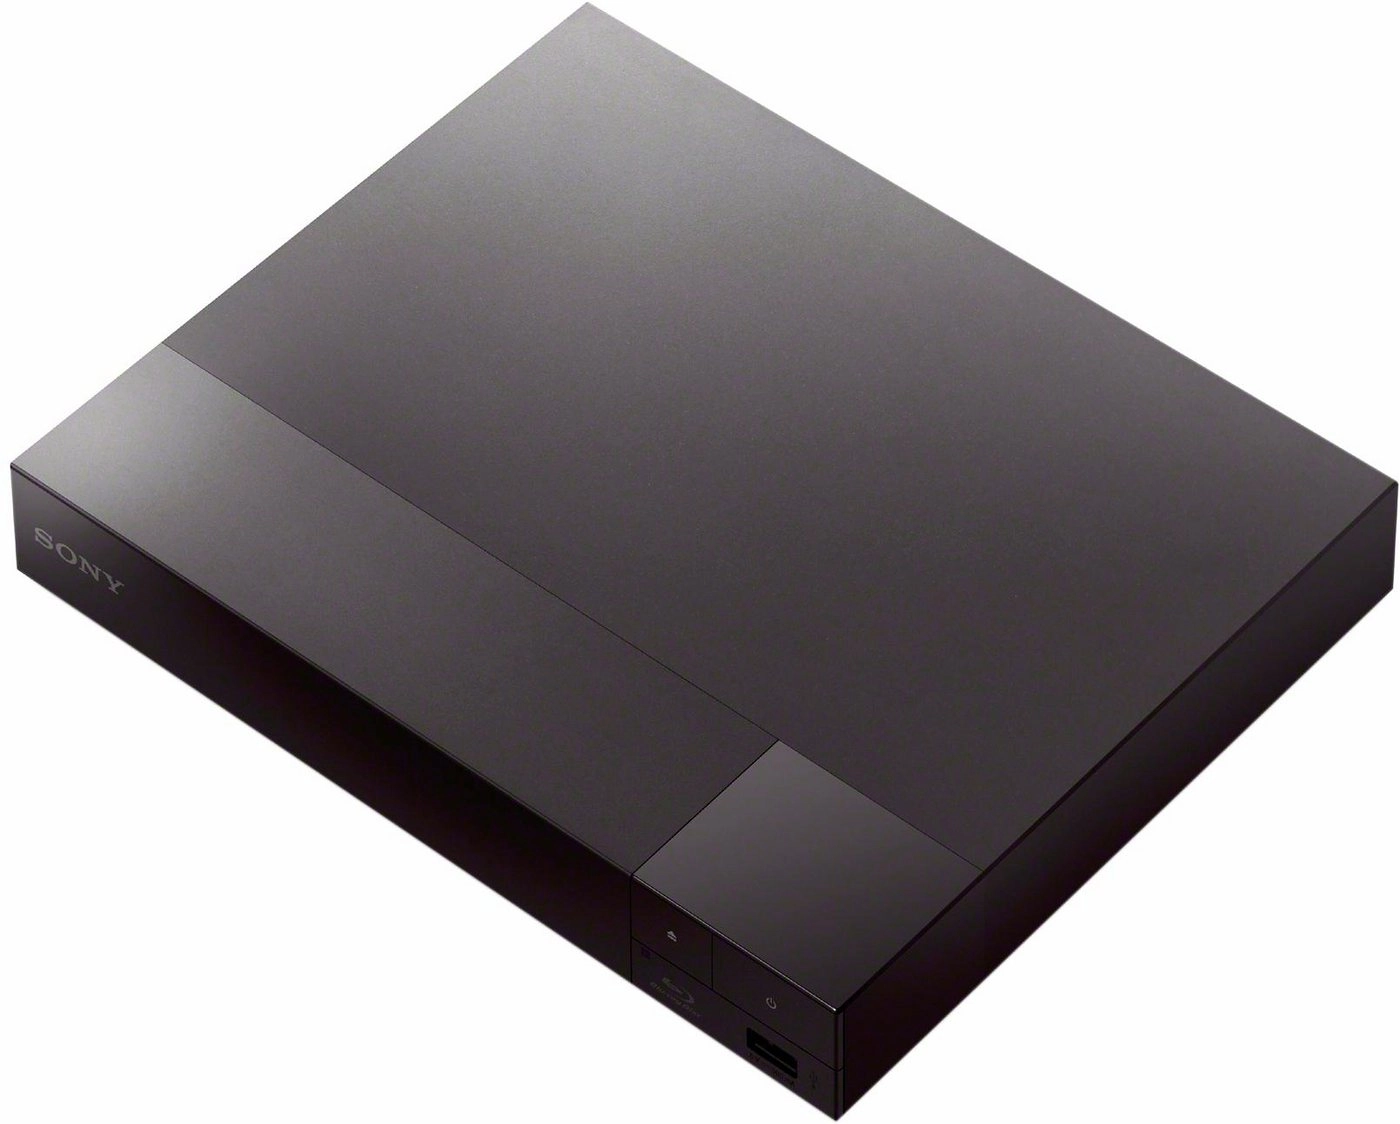 BDP-S3700B, Blu-ray-Player